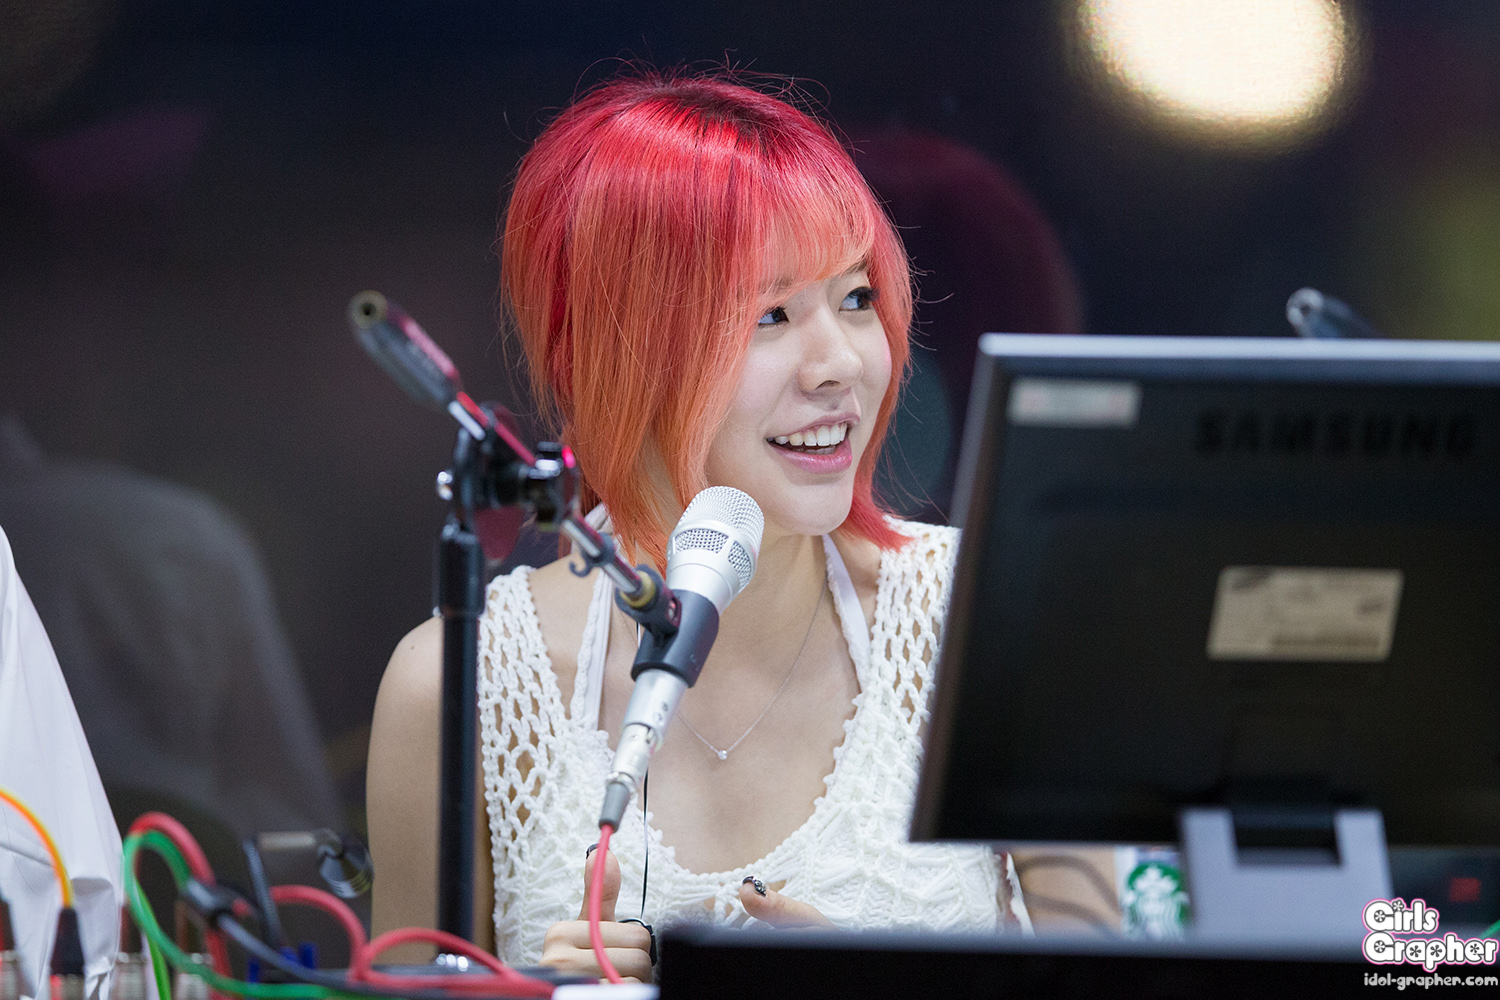 [OTHER][06-02-2015]Hình ảnh mới nhất từ DJ Sunny tại Radio MBC FM4U - "FM Date" - Page 21 2254654455A792E52E5366